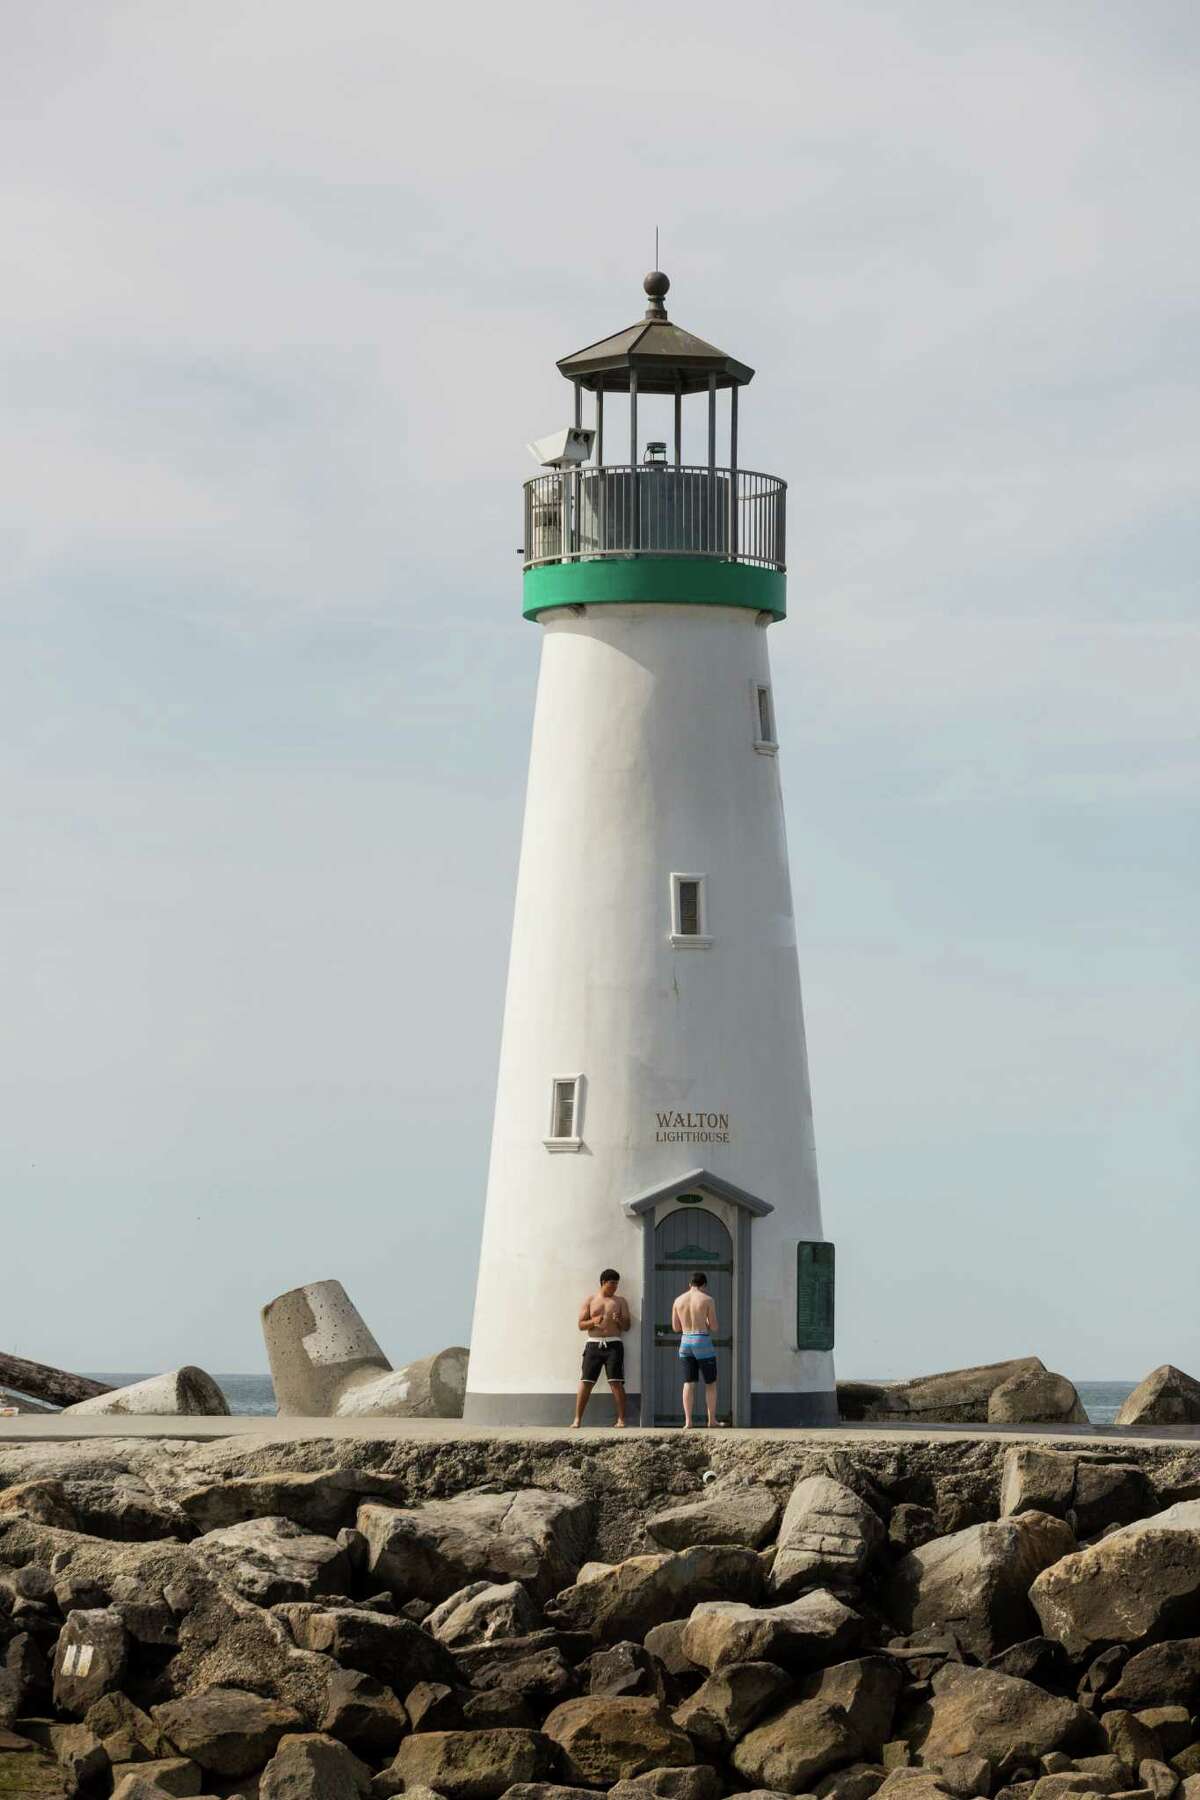 The Walton Lighthouse at the tip of Santa Cruz Harbor in Santa Cruz stands at the ready as a seashore sentinel.